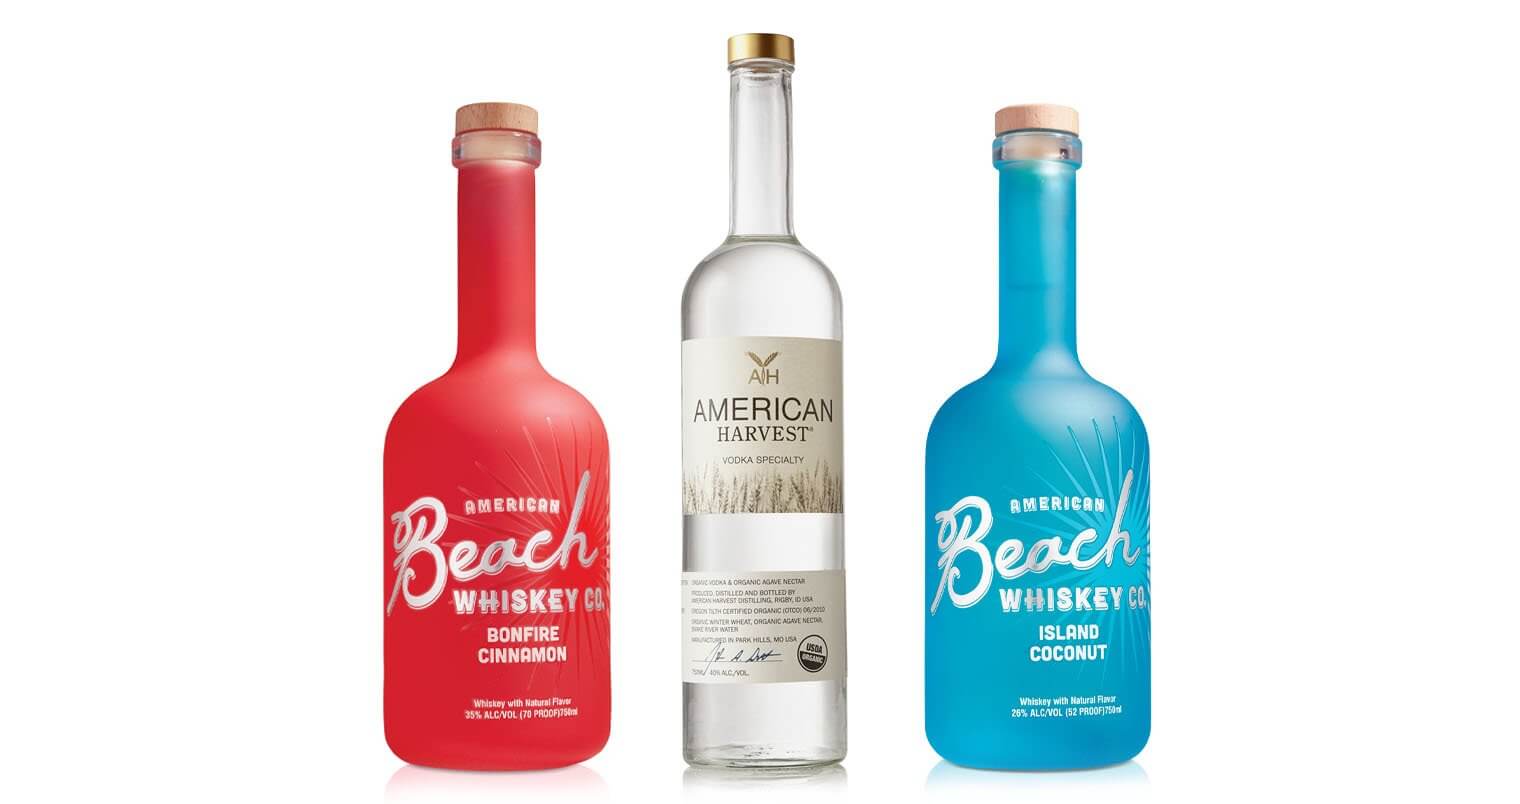 American Harvest Vodka and Beach Whiskey